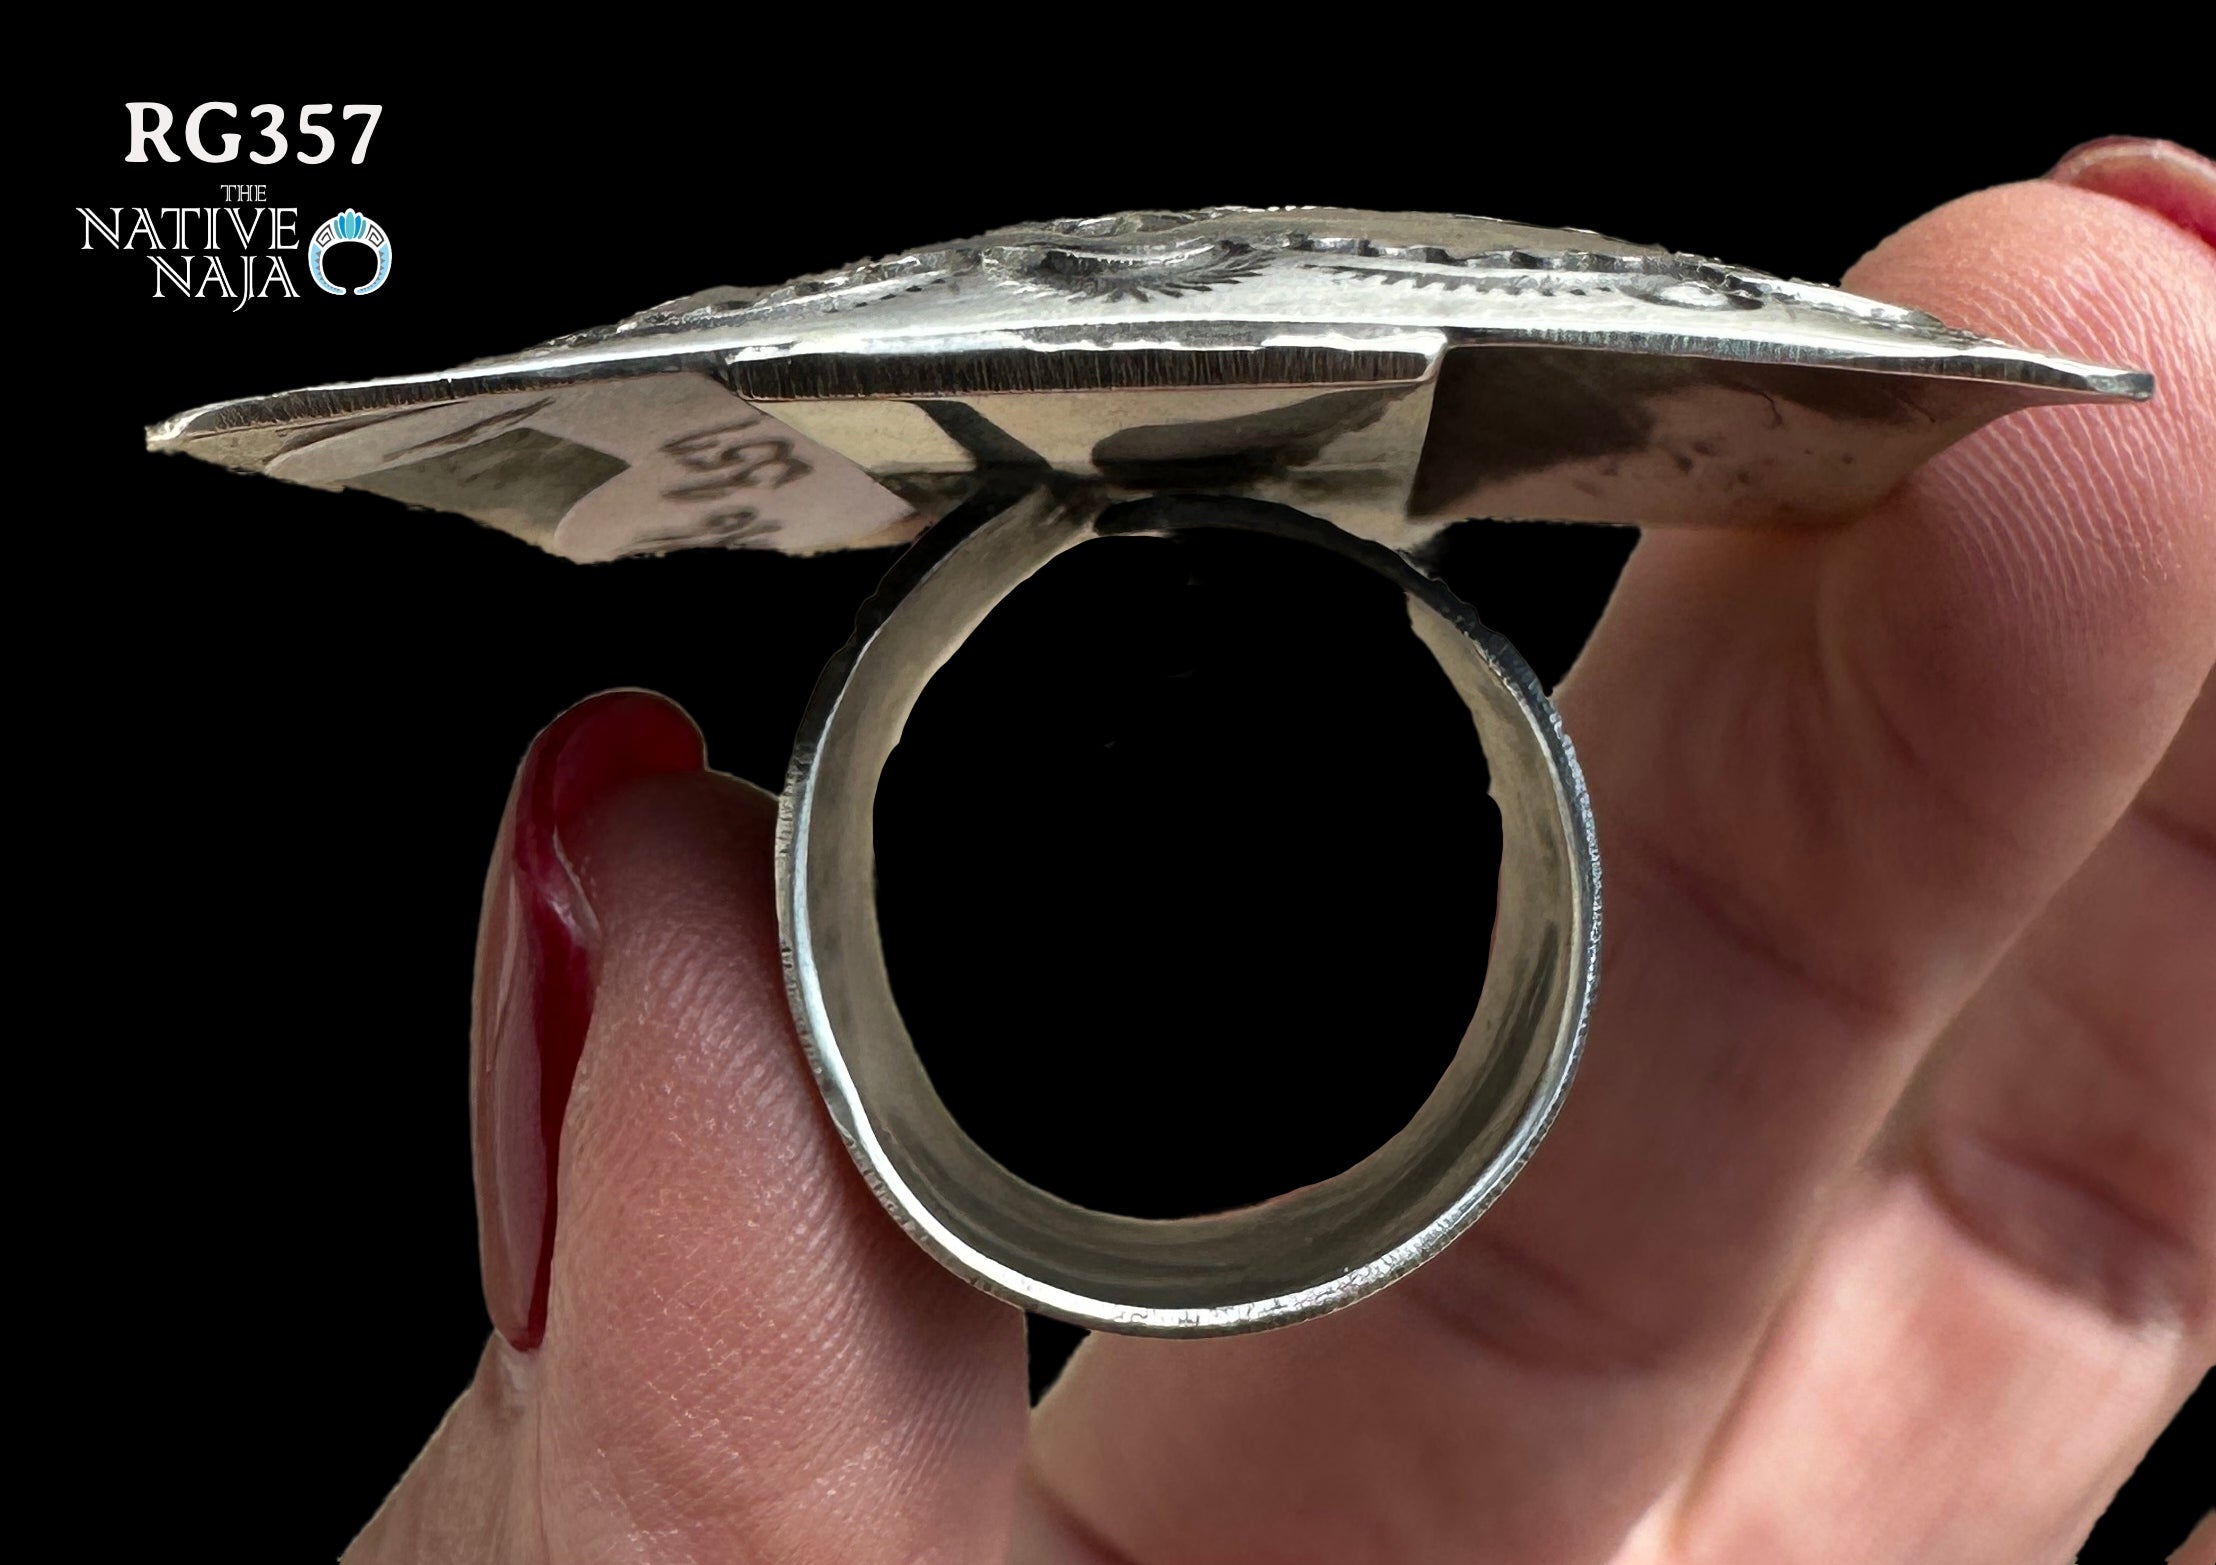 Navajo Artist Vincent J Platero Hand Stamped Wide Adjustable Band Sterling Silver Ring RG357